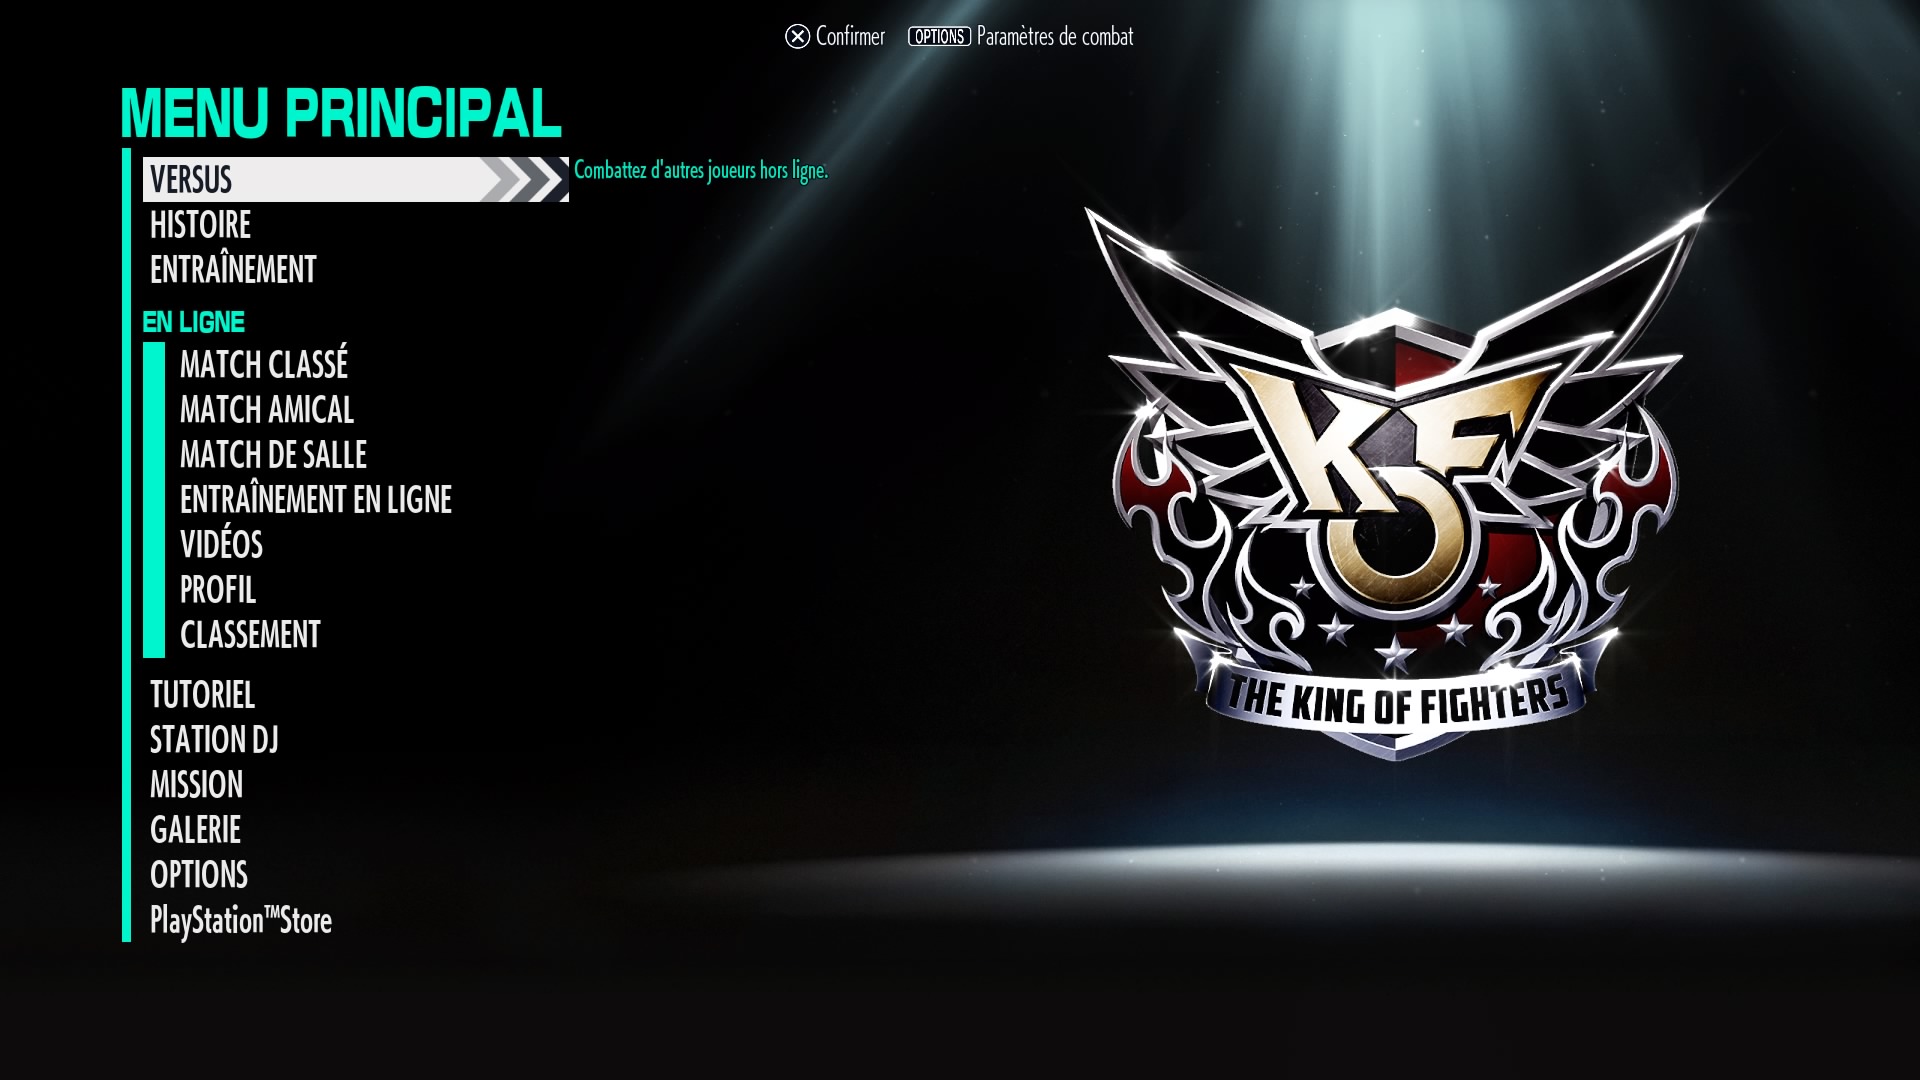 The King of Fighters XV Menu Principal